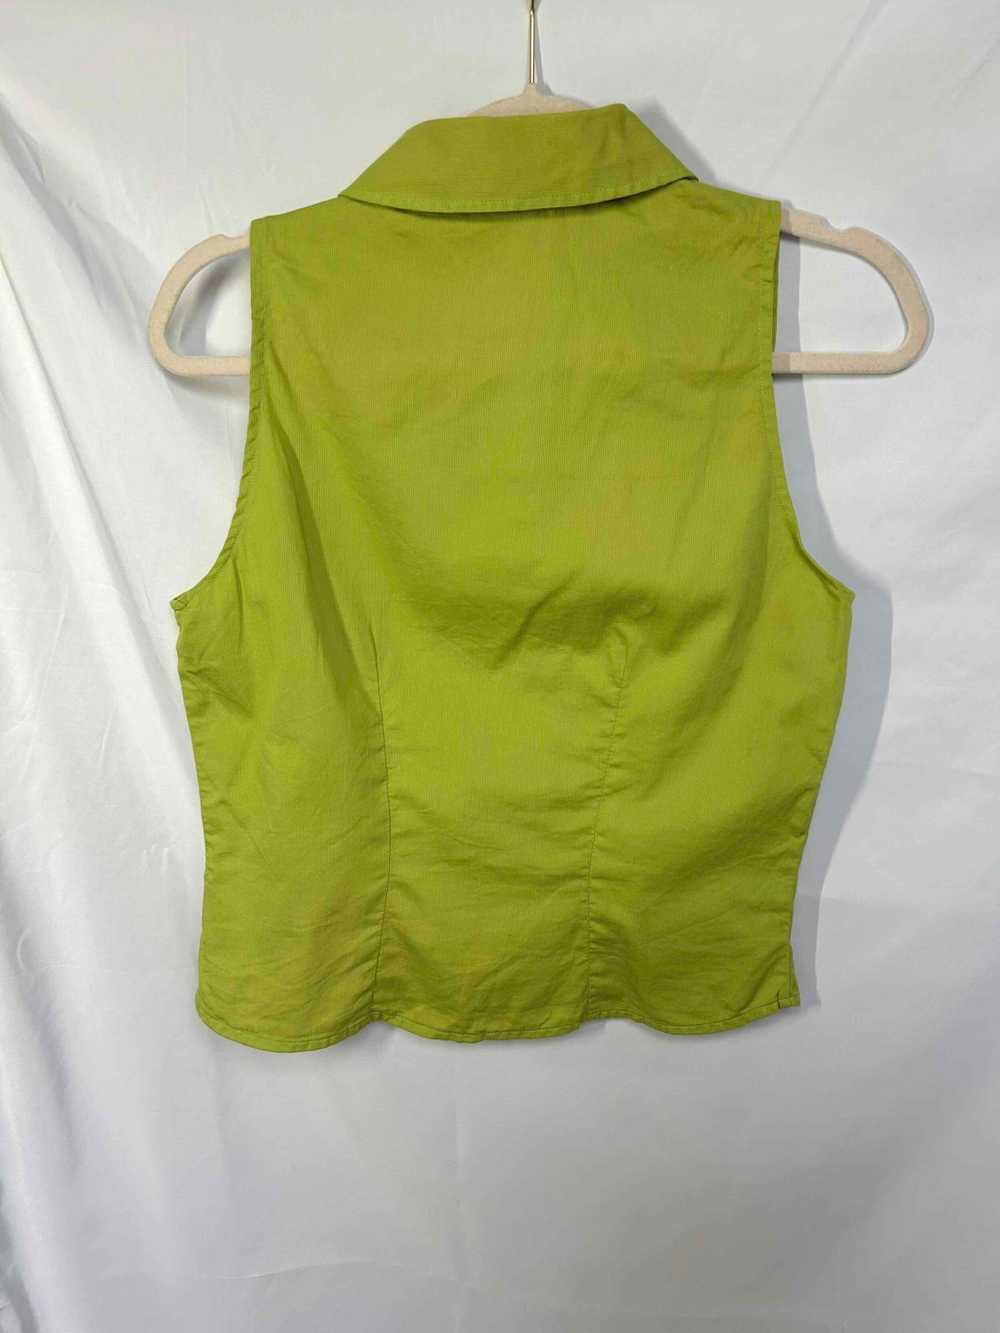 Sleeveless cotton shirt - Vintage sleeveless blou… - image 2